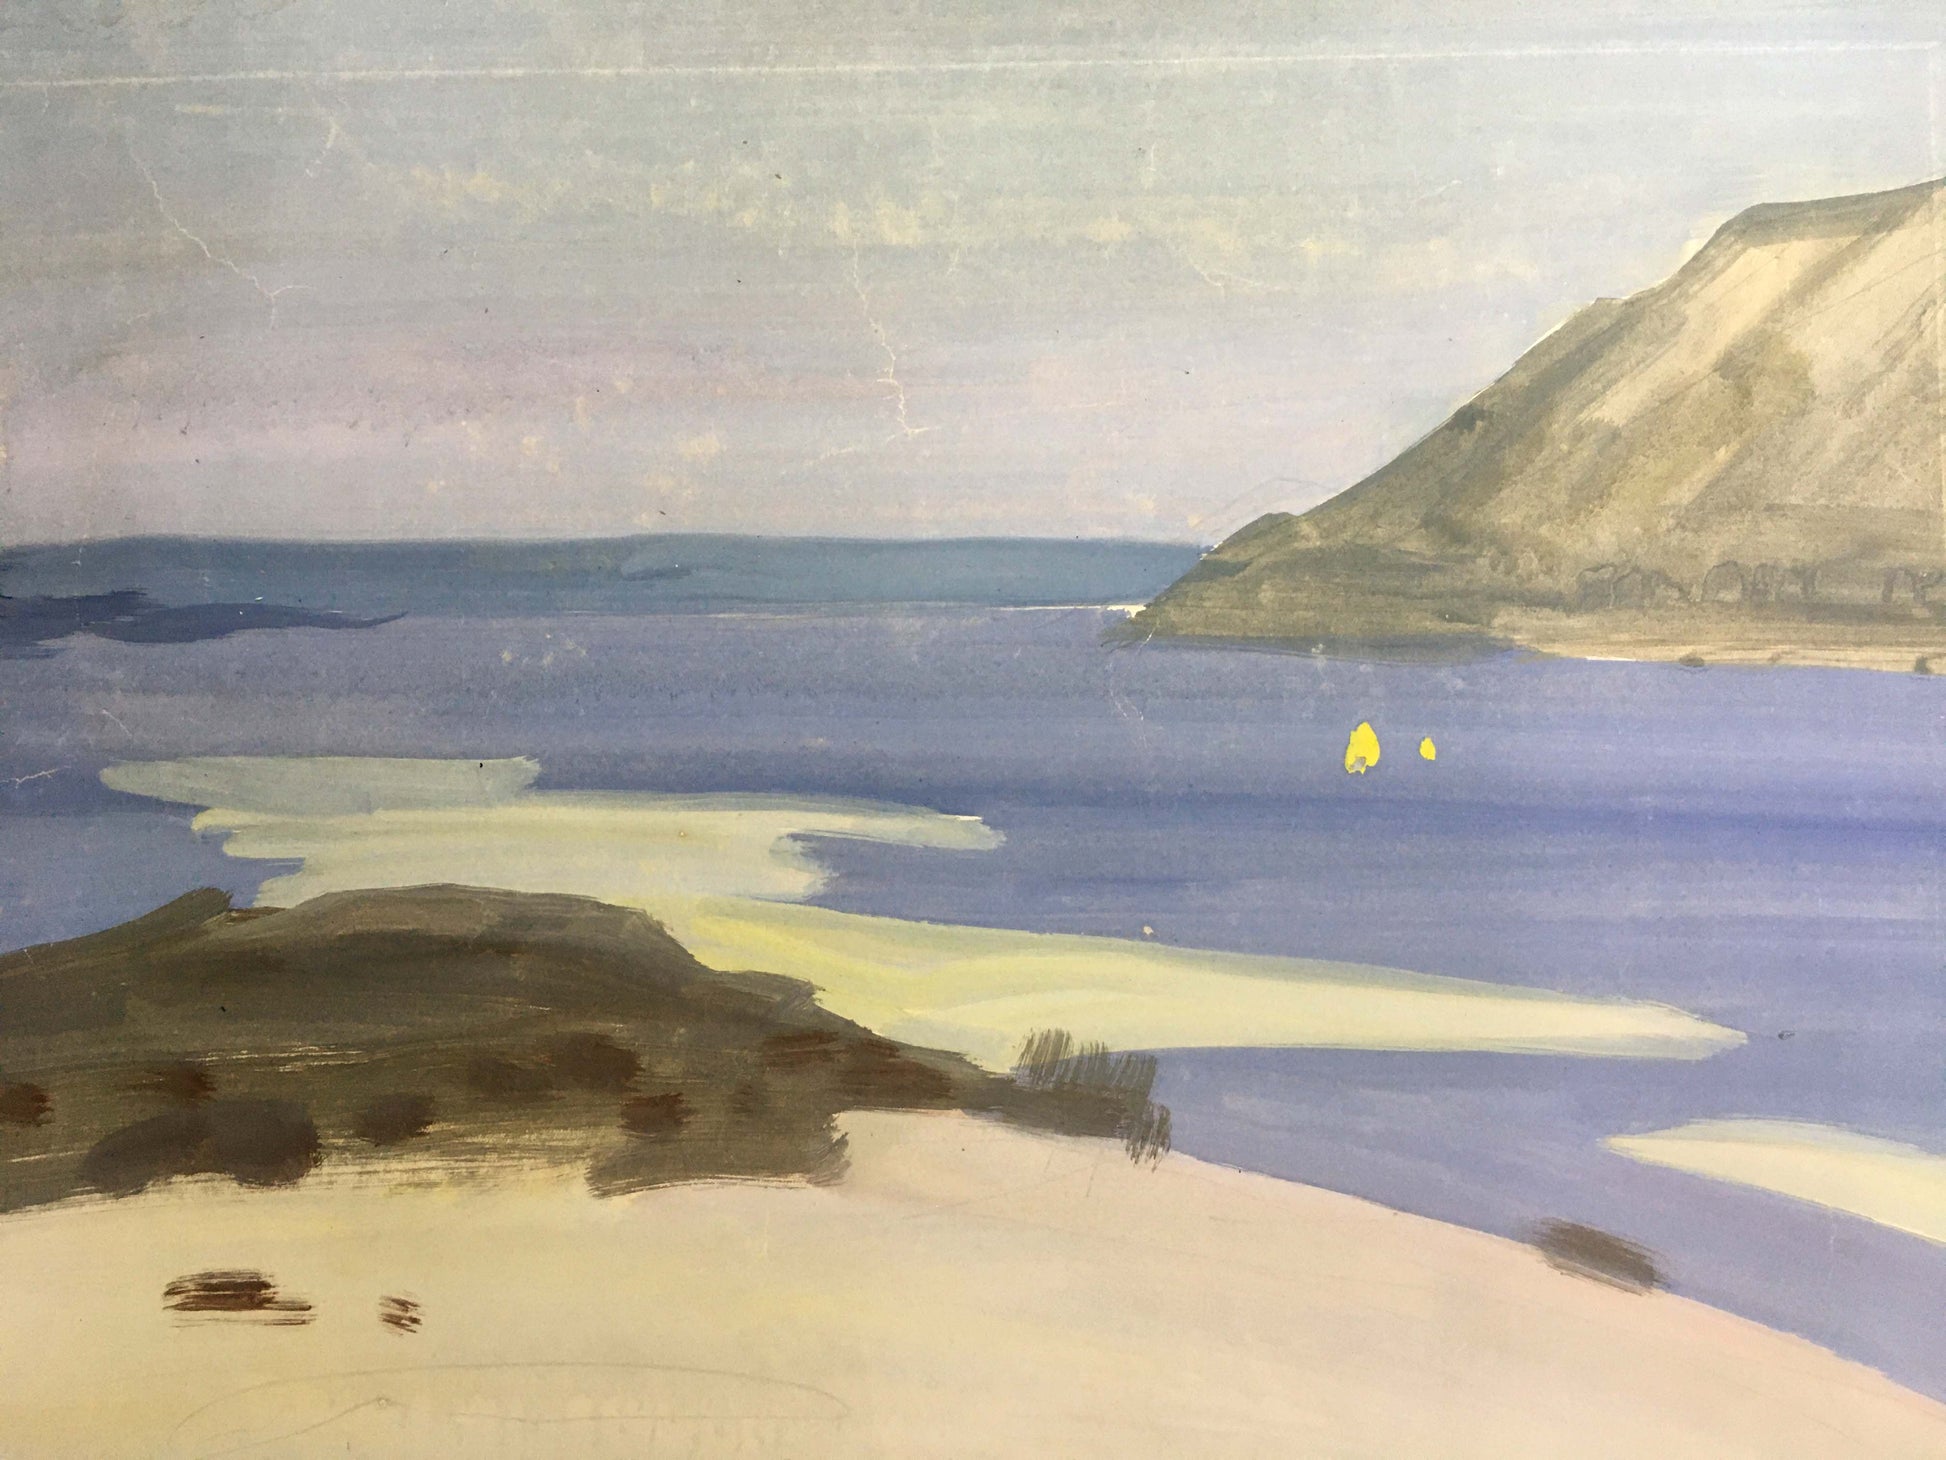 Vladimir Chernikov's Gouache Masterpiece: "On the Shore"